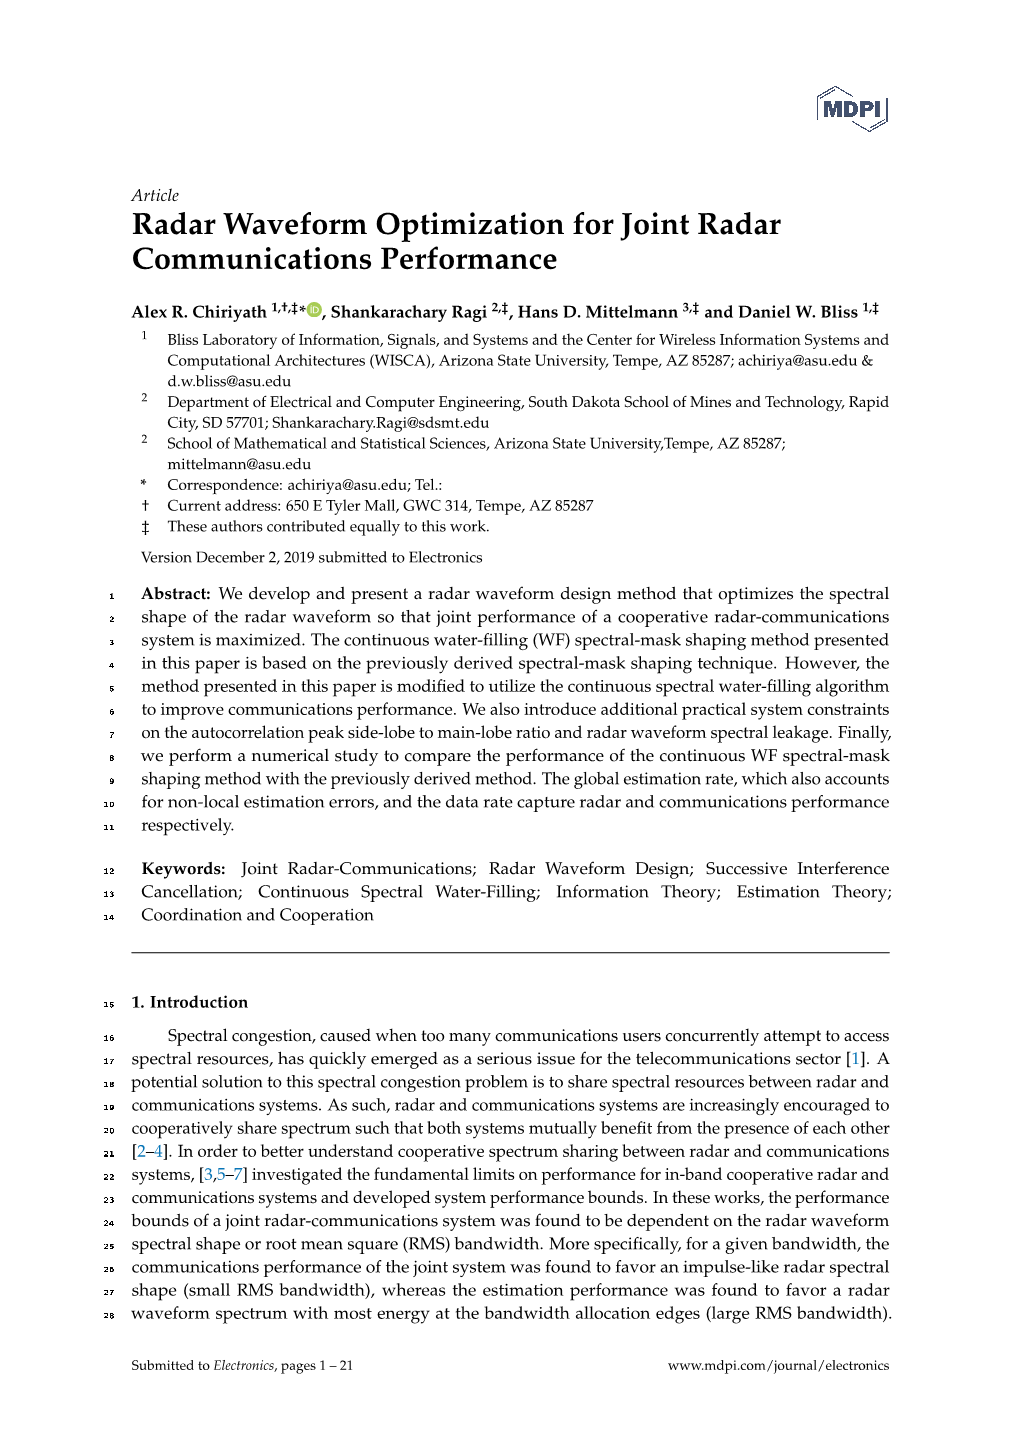 Radar Waveform Optimization for Joint Radar Communications Performance